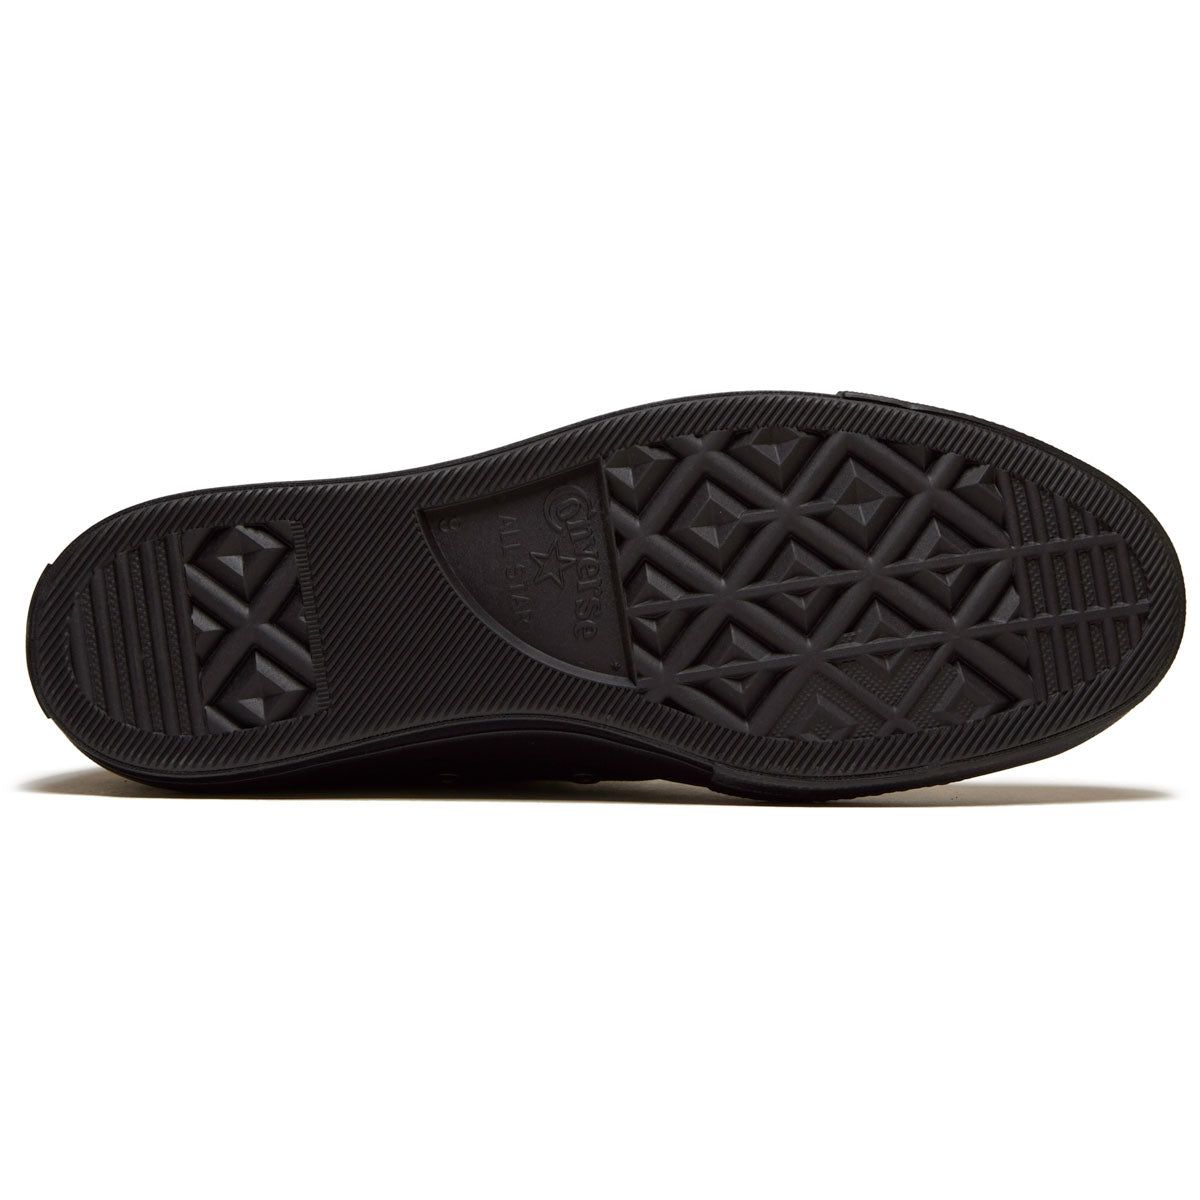 Converse Chuck 70 Vintage Hi Shoes - Black/Almost Black/Black image 4